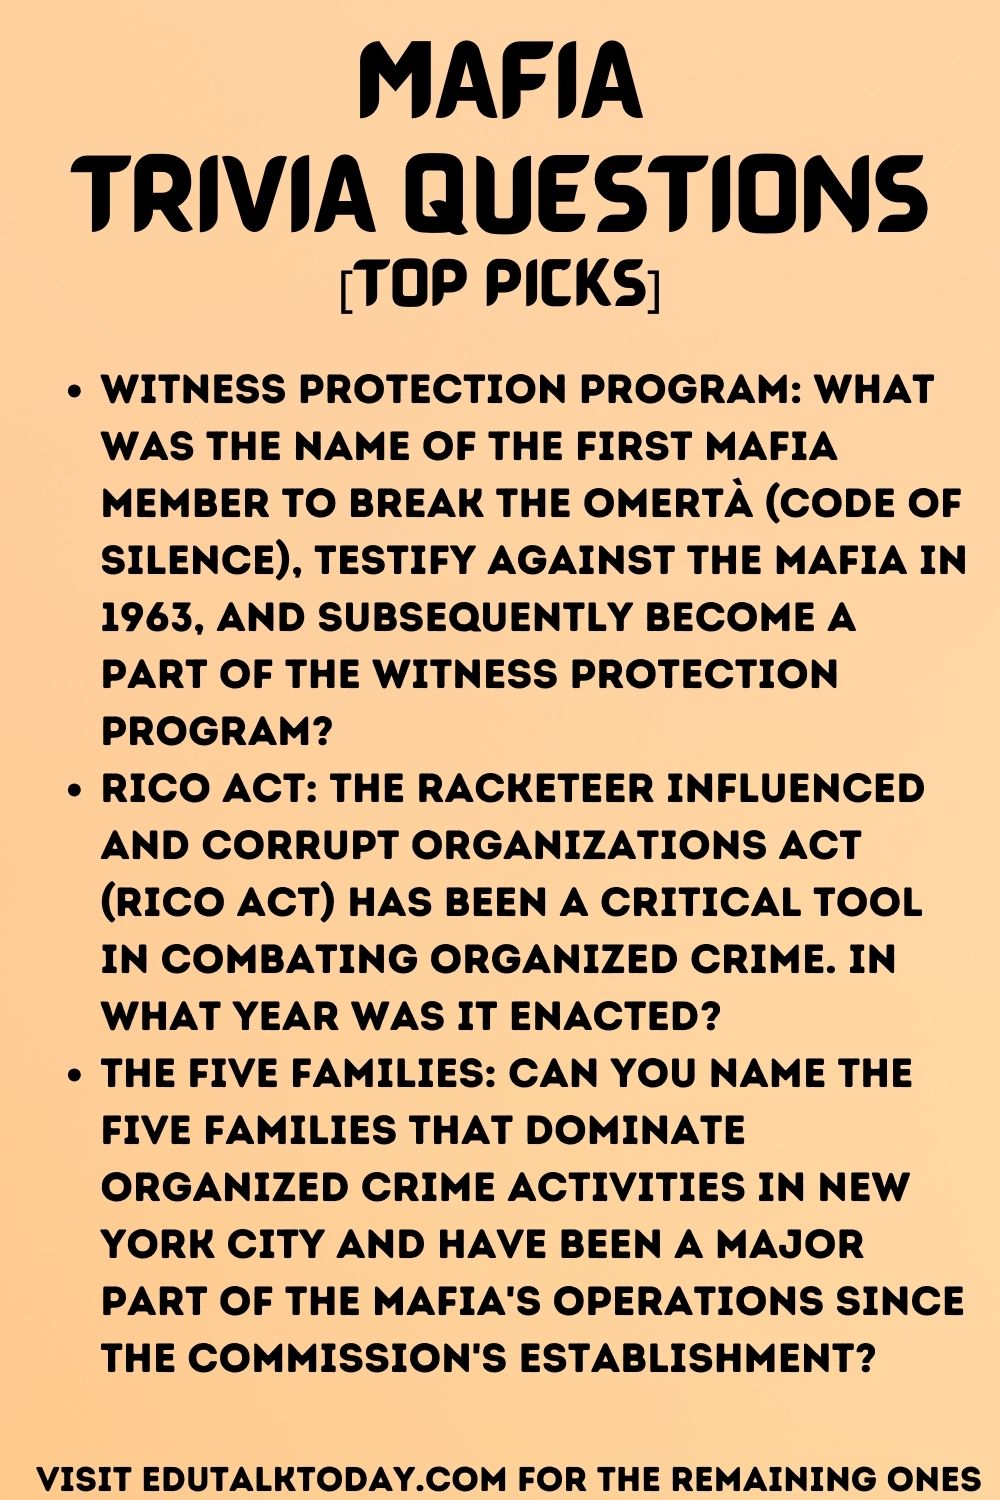 Mafia Trivia Questions
